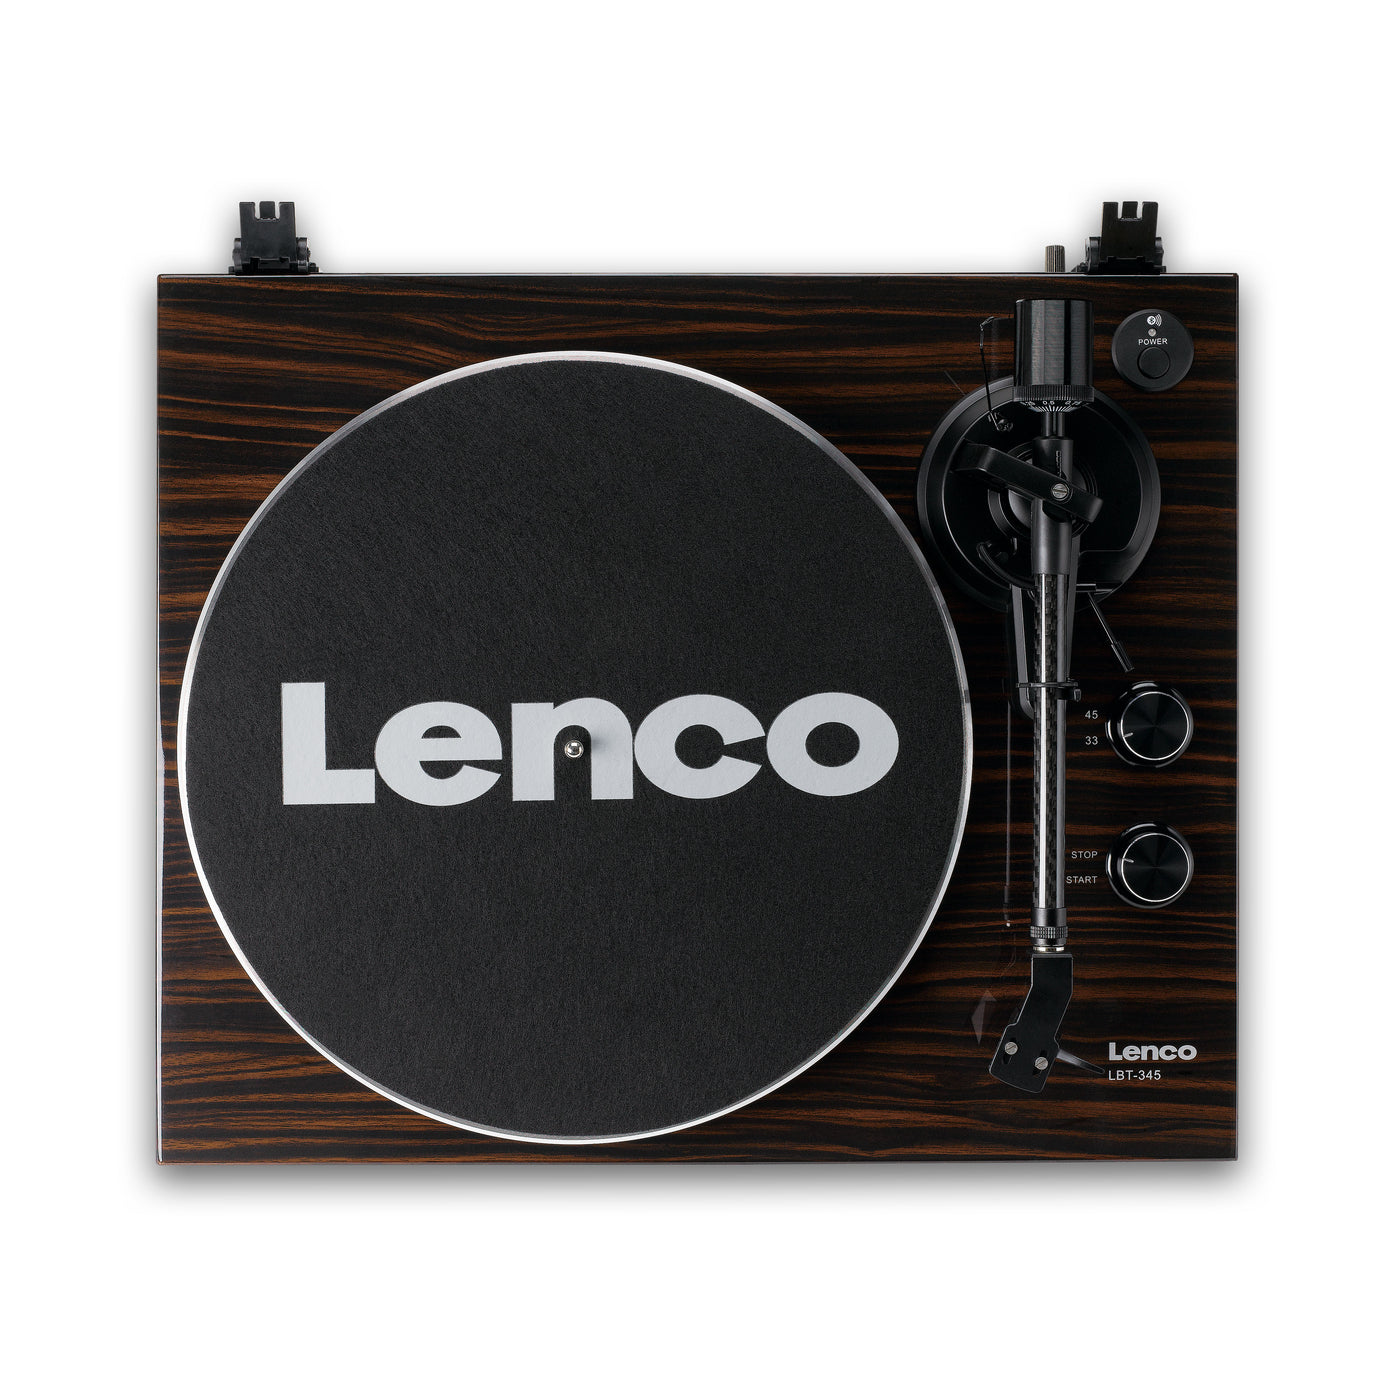 Lenco LBT-345WA - Plattenspieler mit Bluetooth® und Ortofon 2M Red Tonabnehmer, inklusive verchromtem Plattenspielerstabilisator - Walnuss